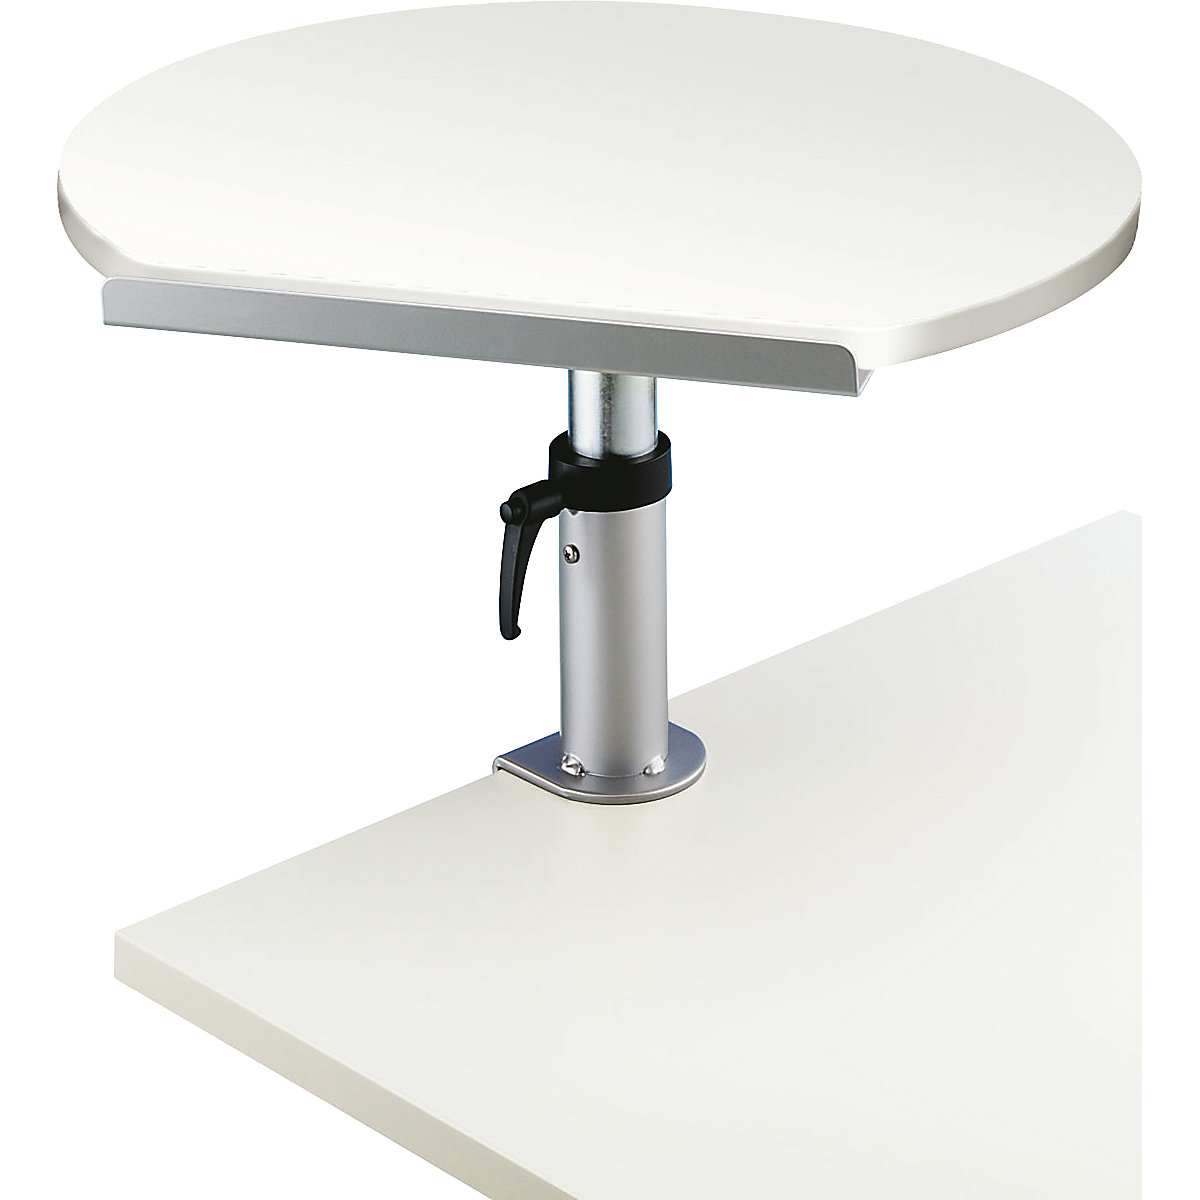 Table pedestal, ergonomic - MAUL